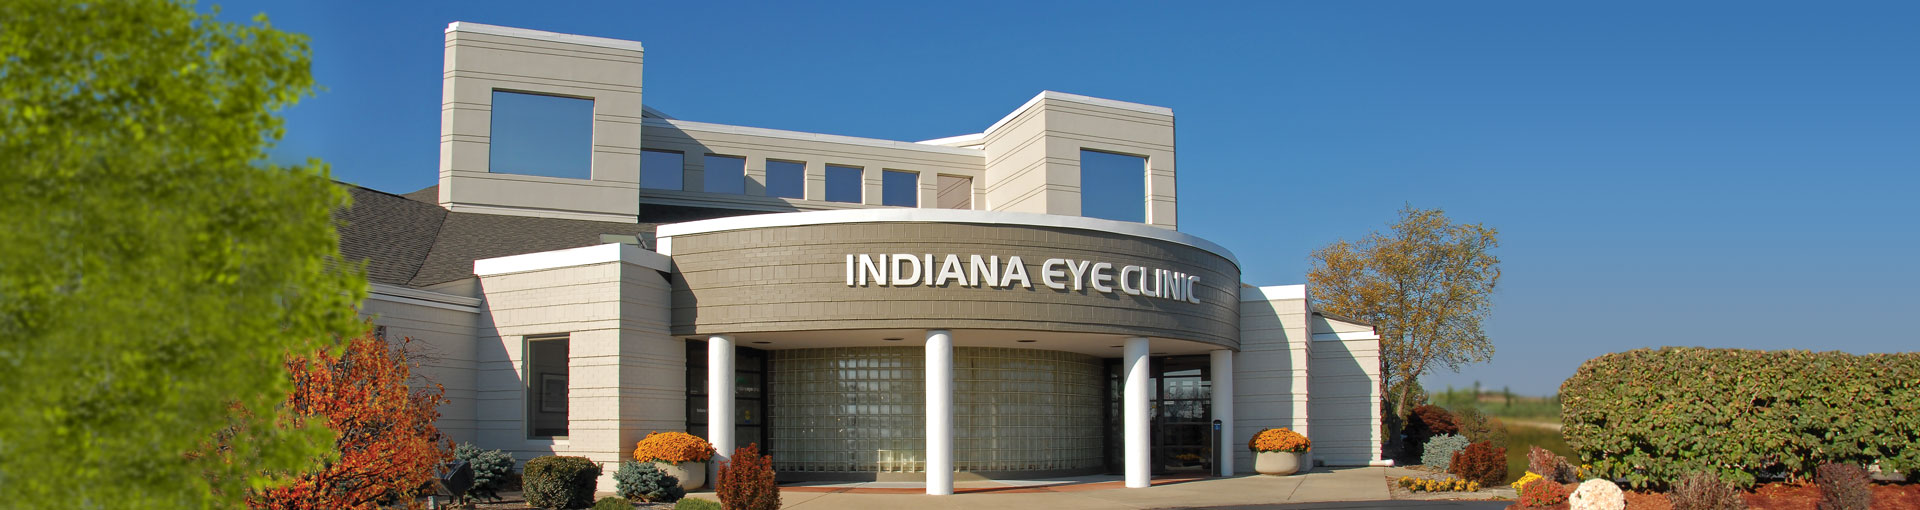 Indiana Eye Clinic Building